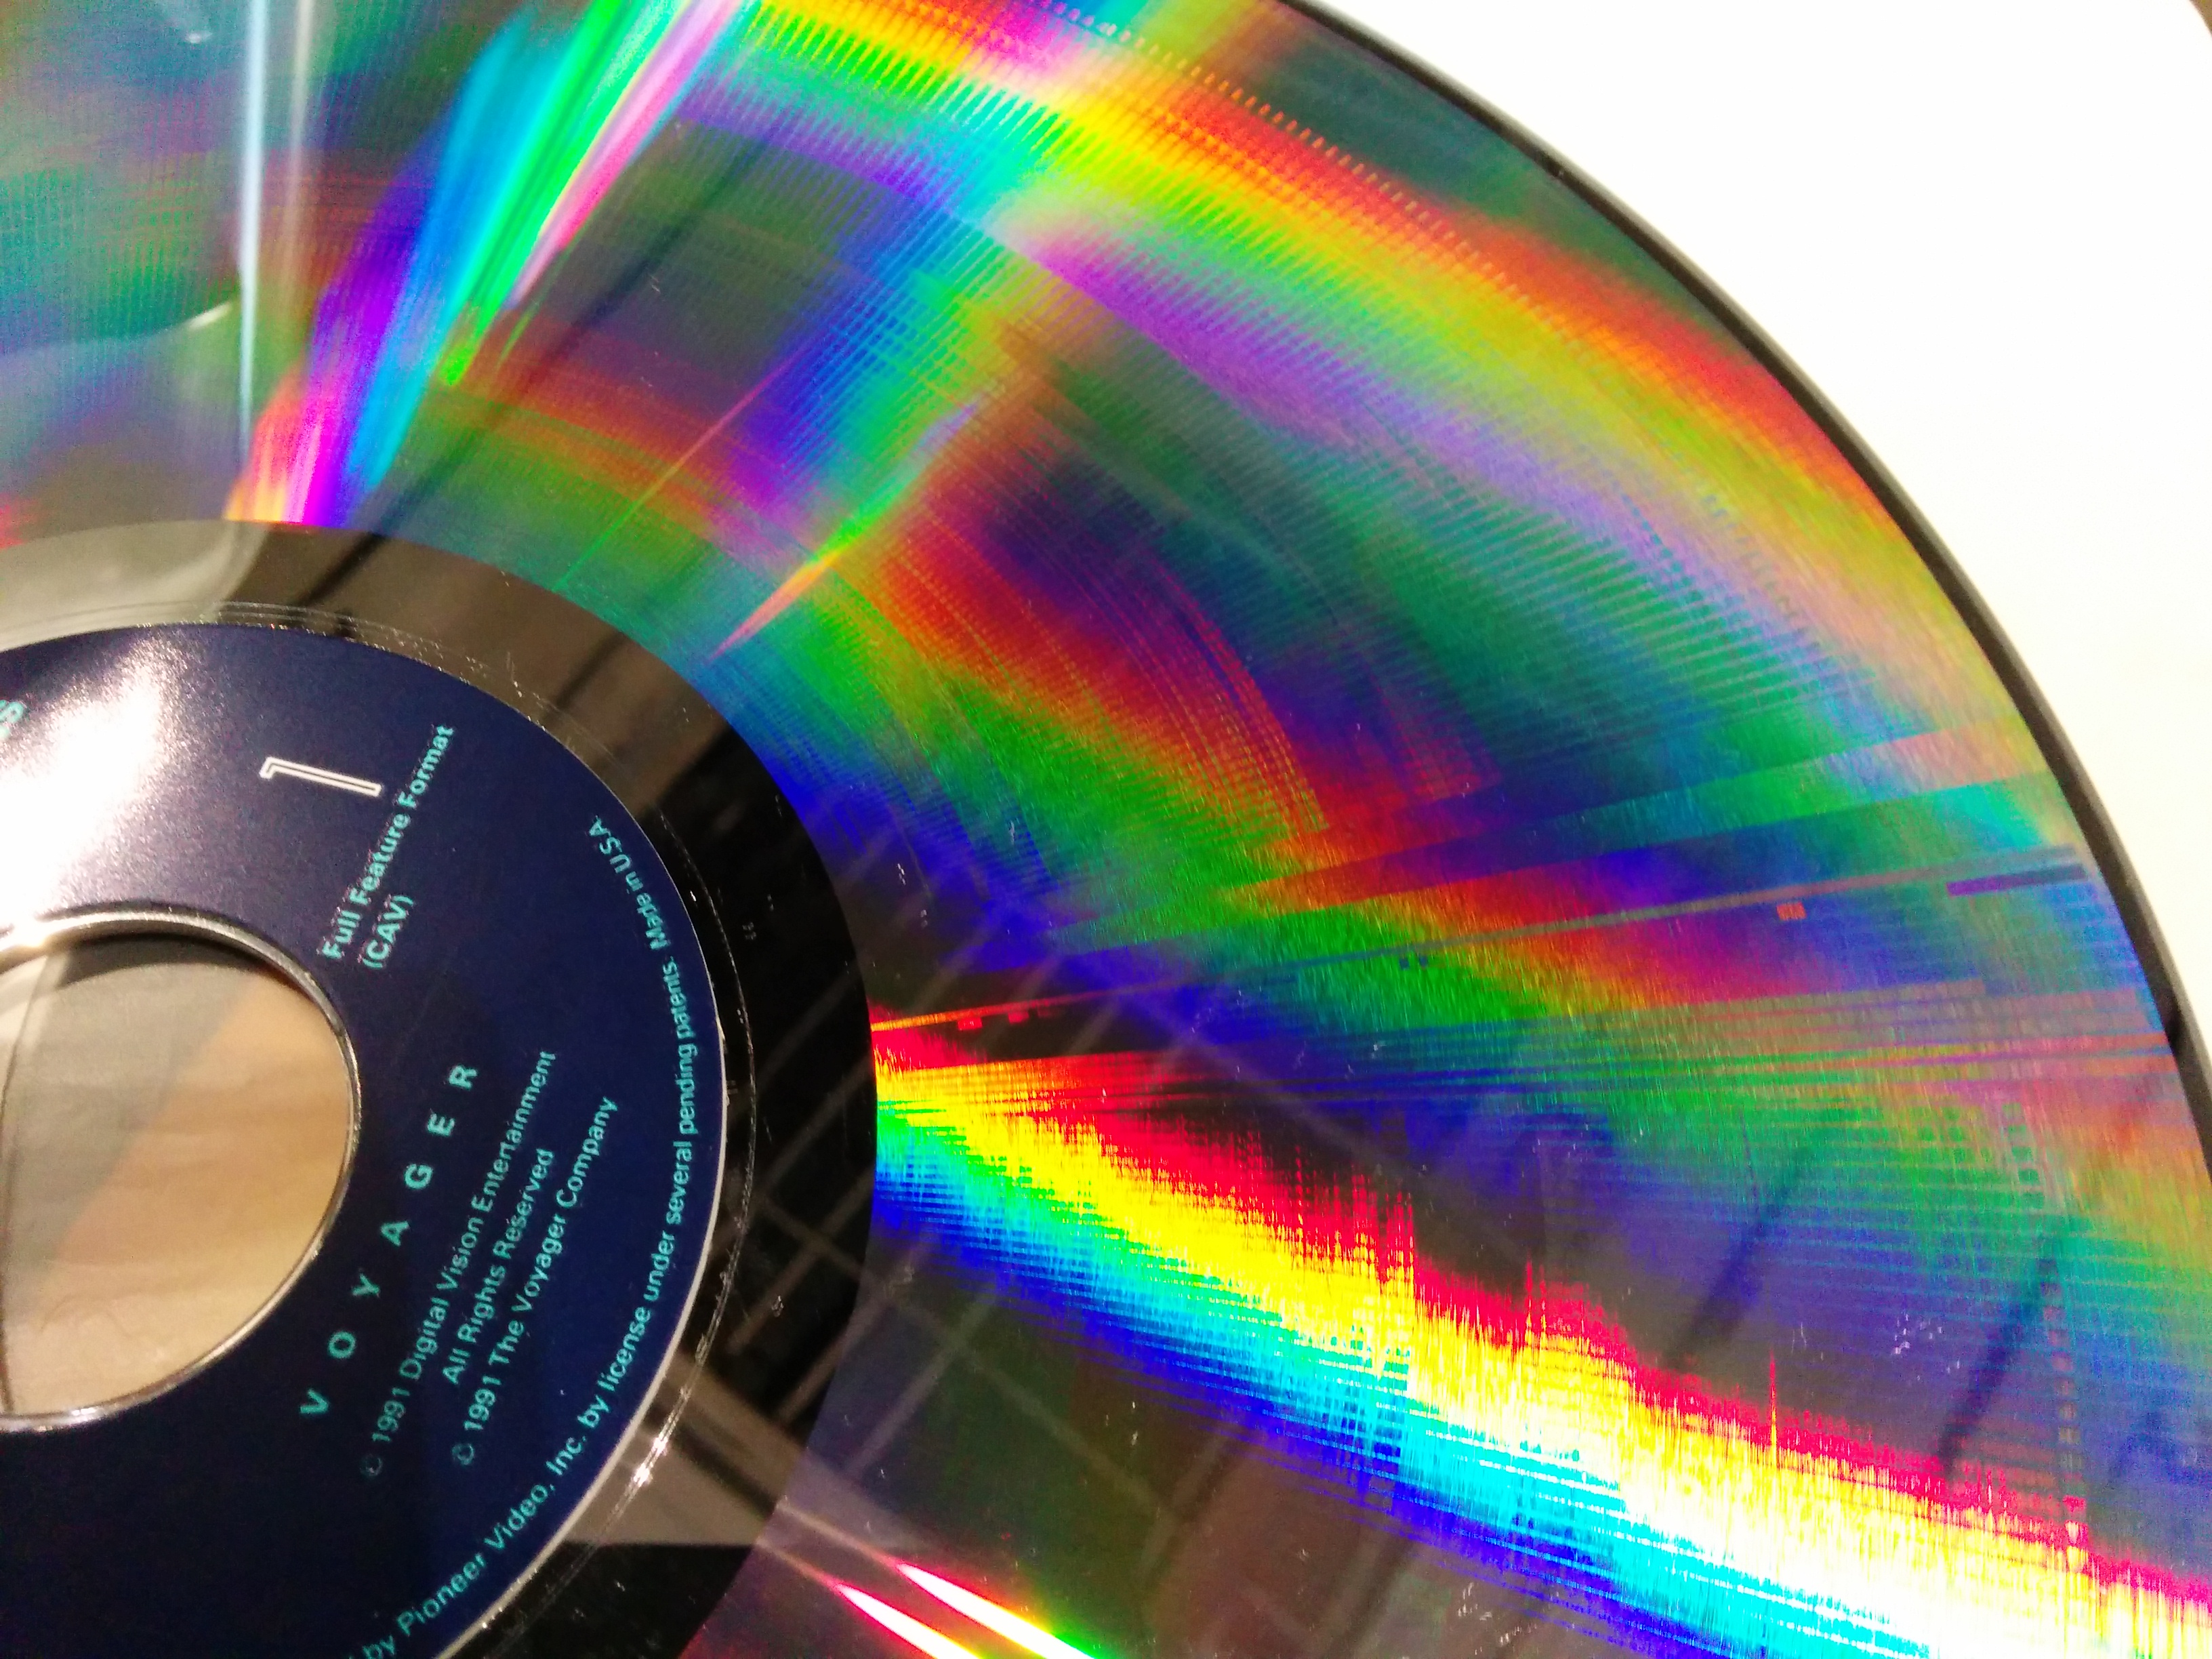 Laserdisc CAV